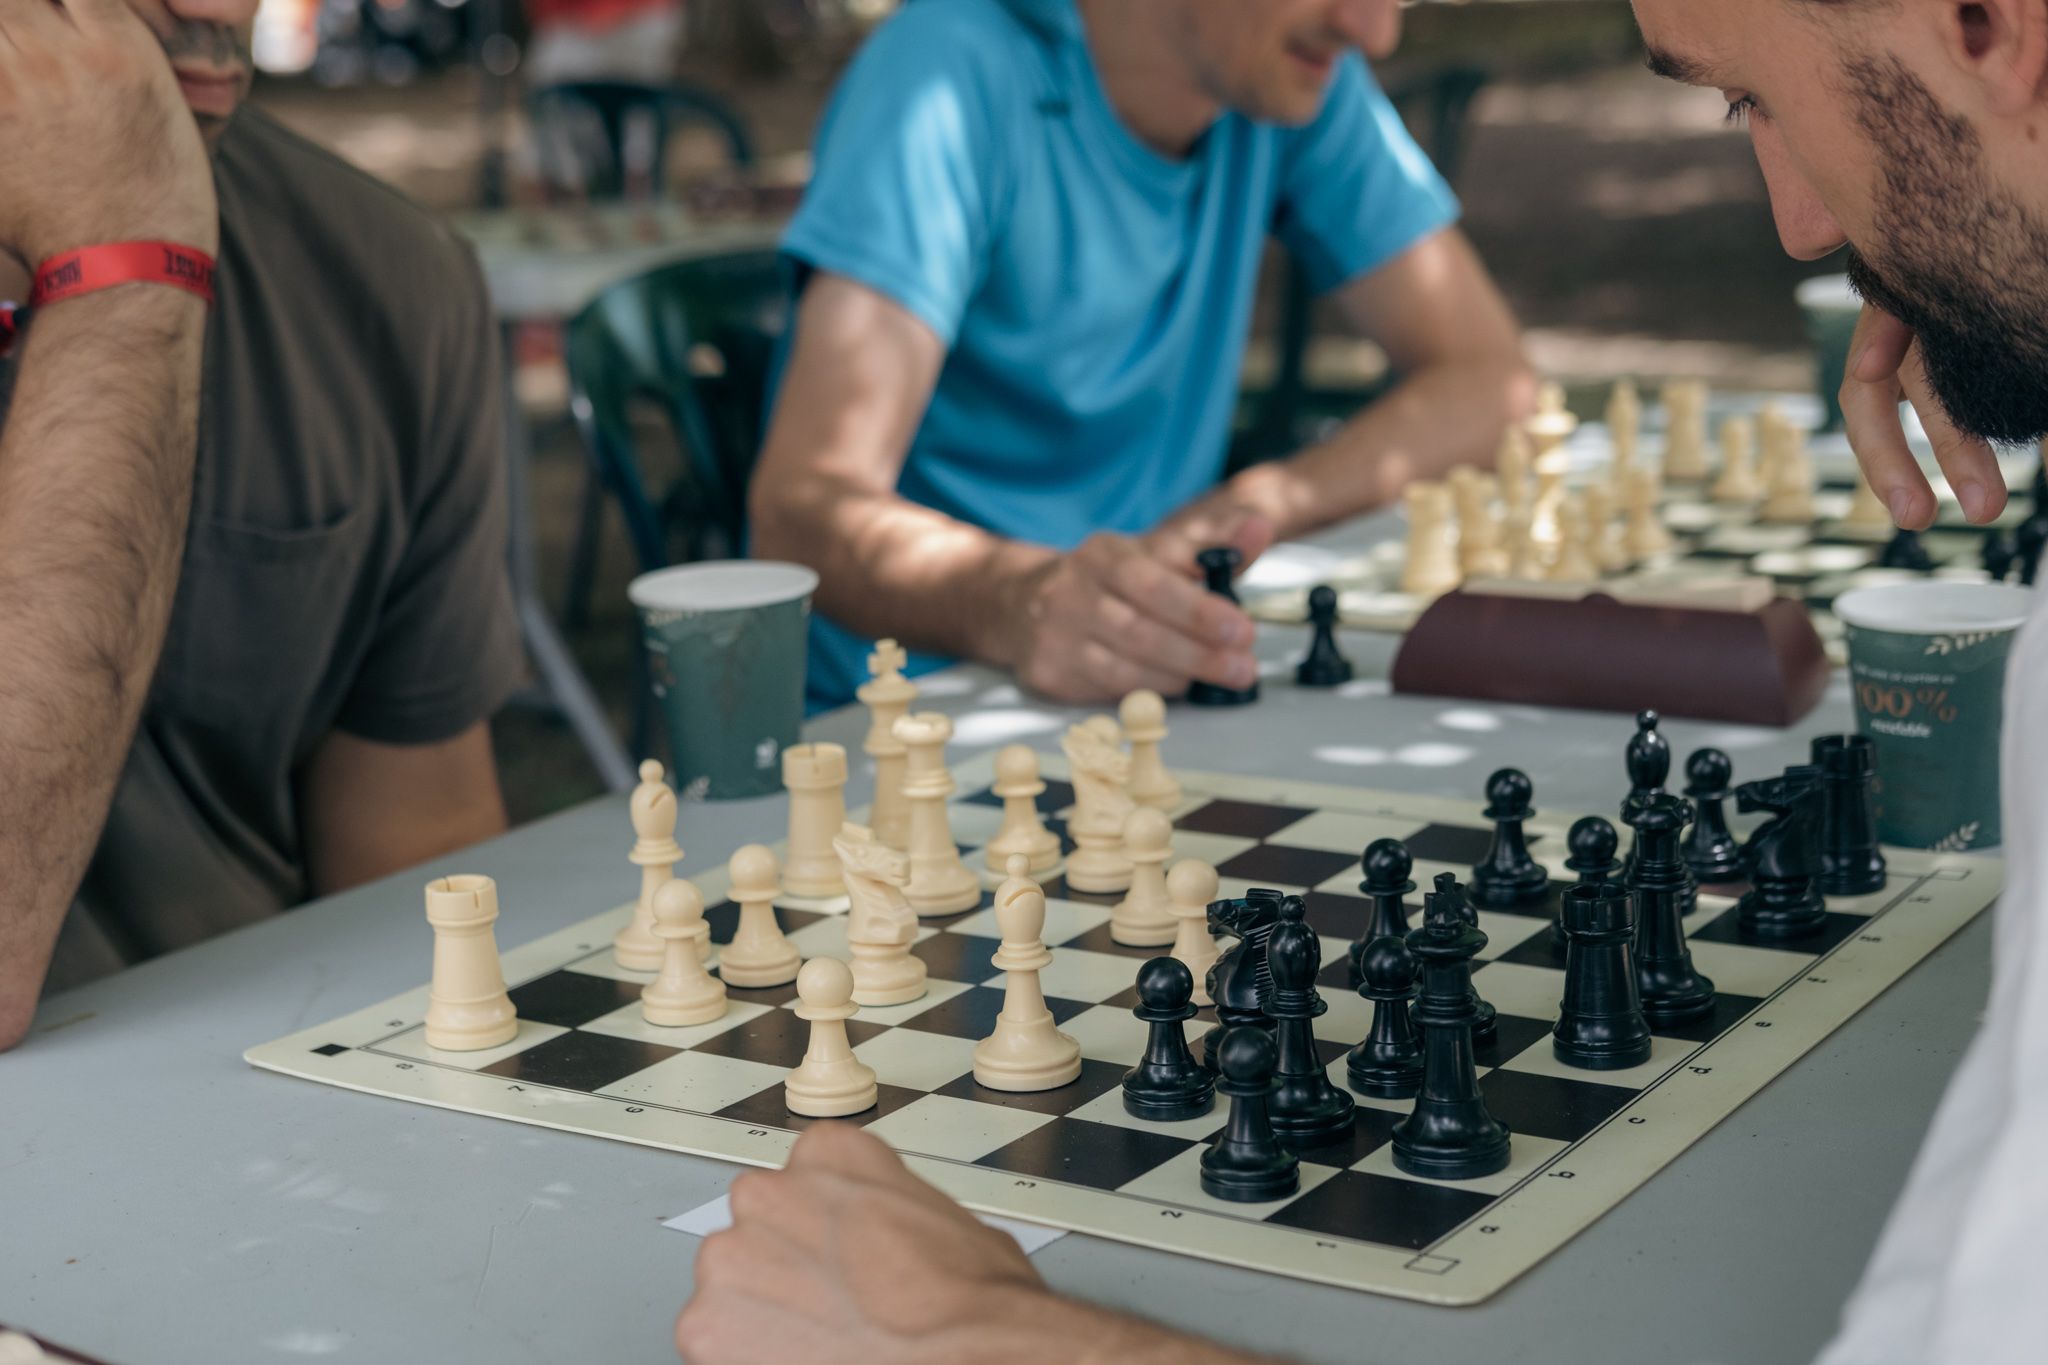 Torneigs de partides ràpides d’escacs als Jardins del Monestir. FOTO: Ale Gómez